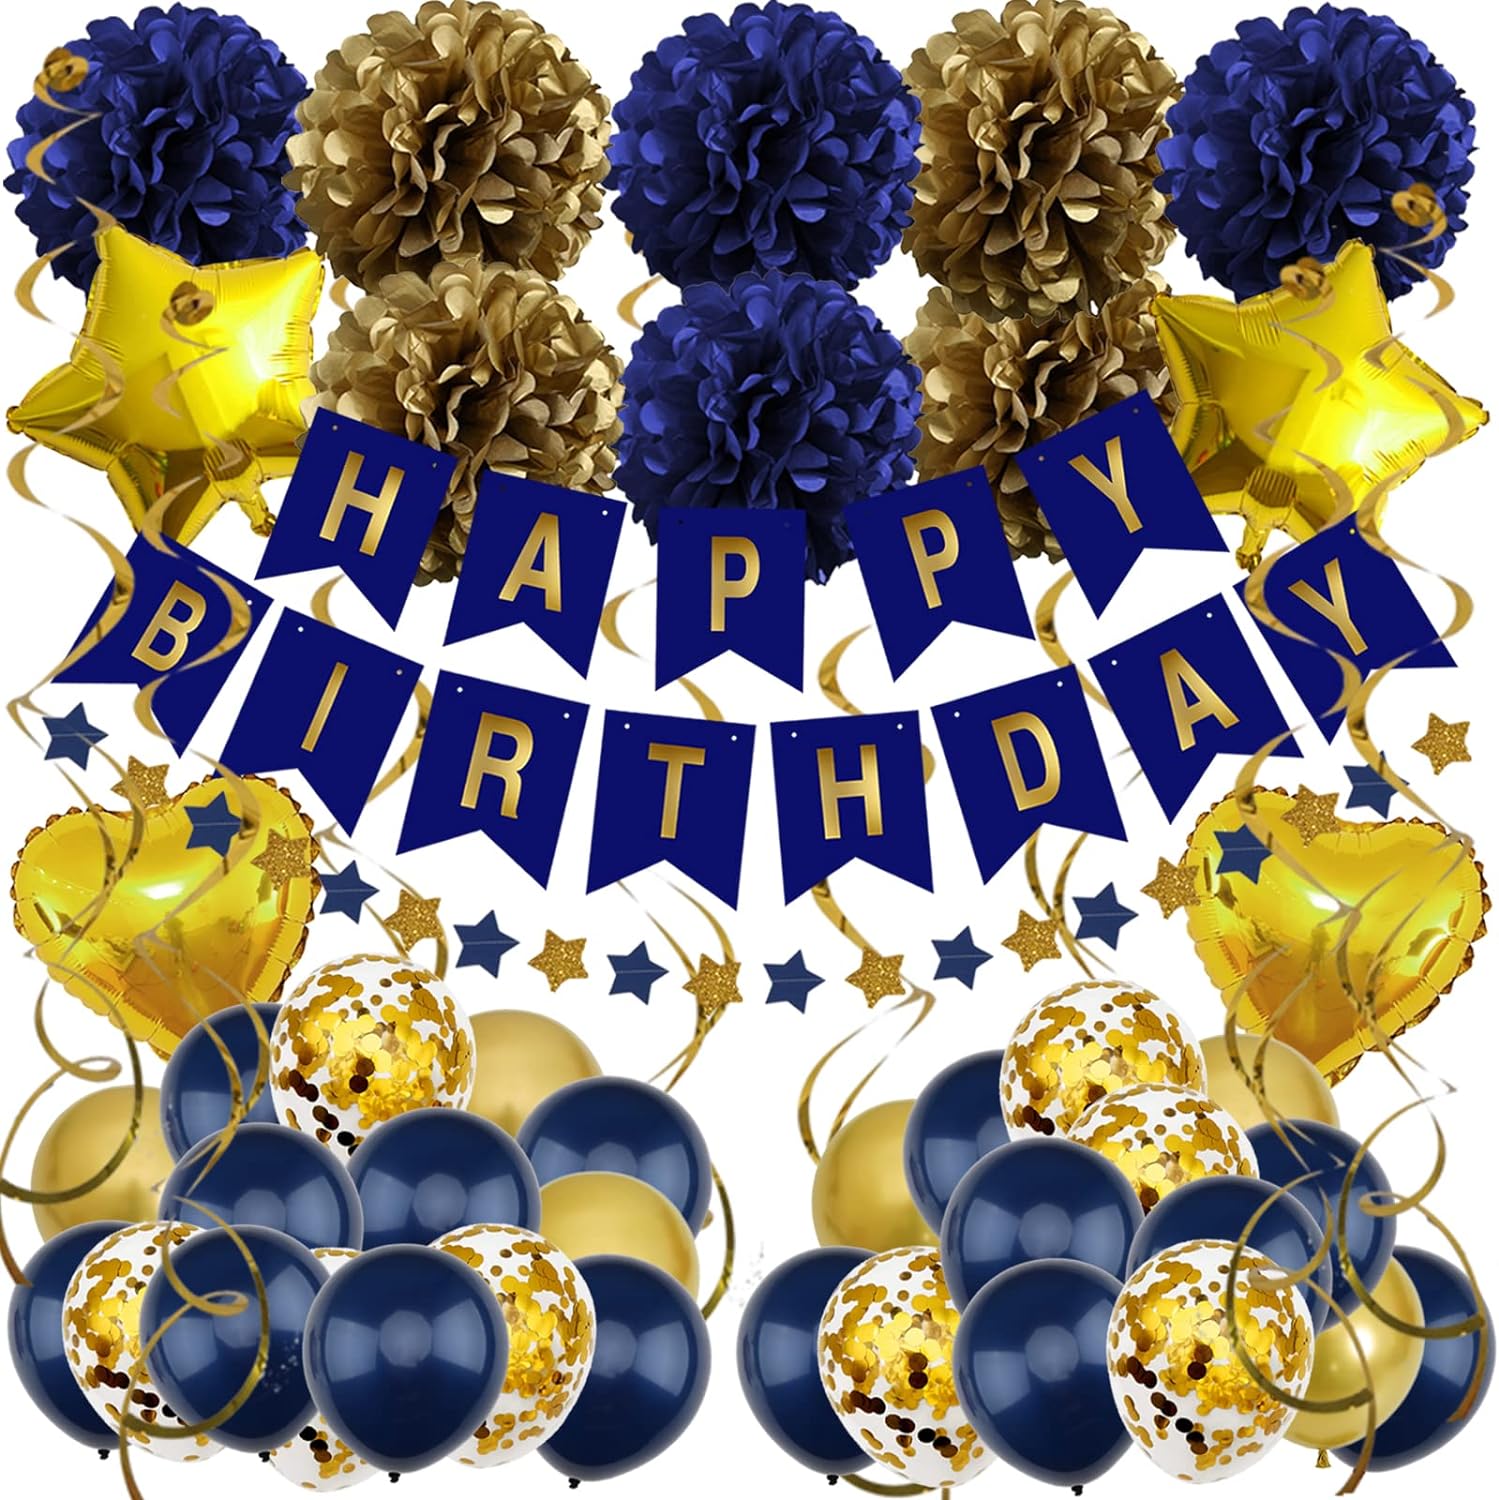 ZERODECO Birthday Decorations, Navy Blue Gold Birthday Party Decorations Happy Birthday Banner Pompoms Balloon for Boys Girls Men Women Birthday Party Decorations Supplies - Navy Blue Gold